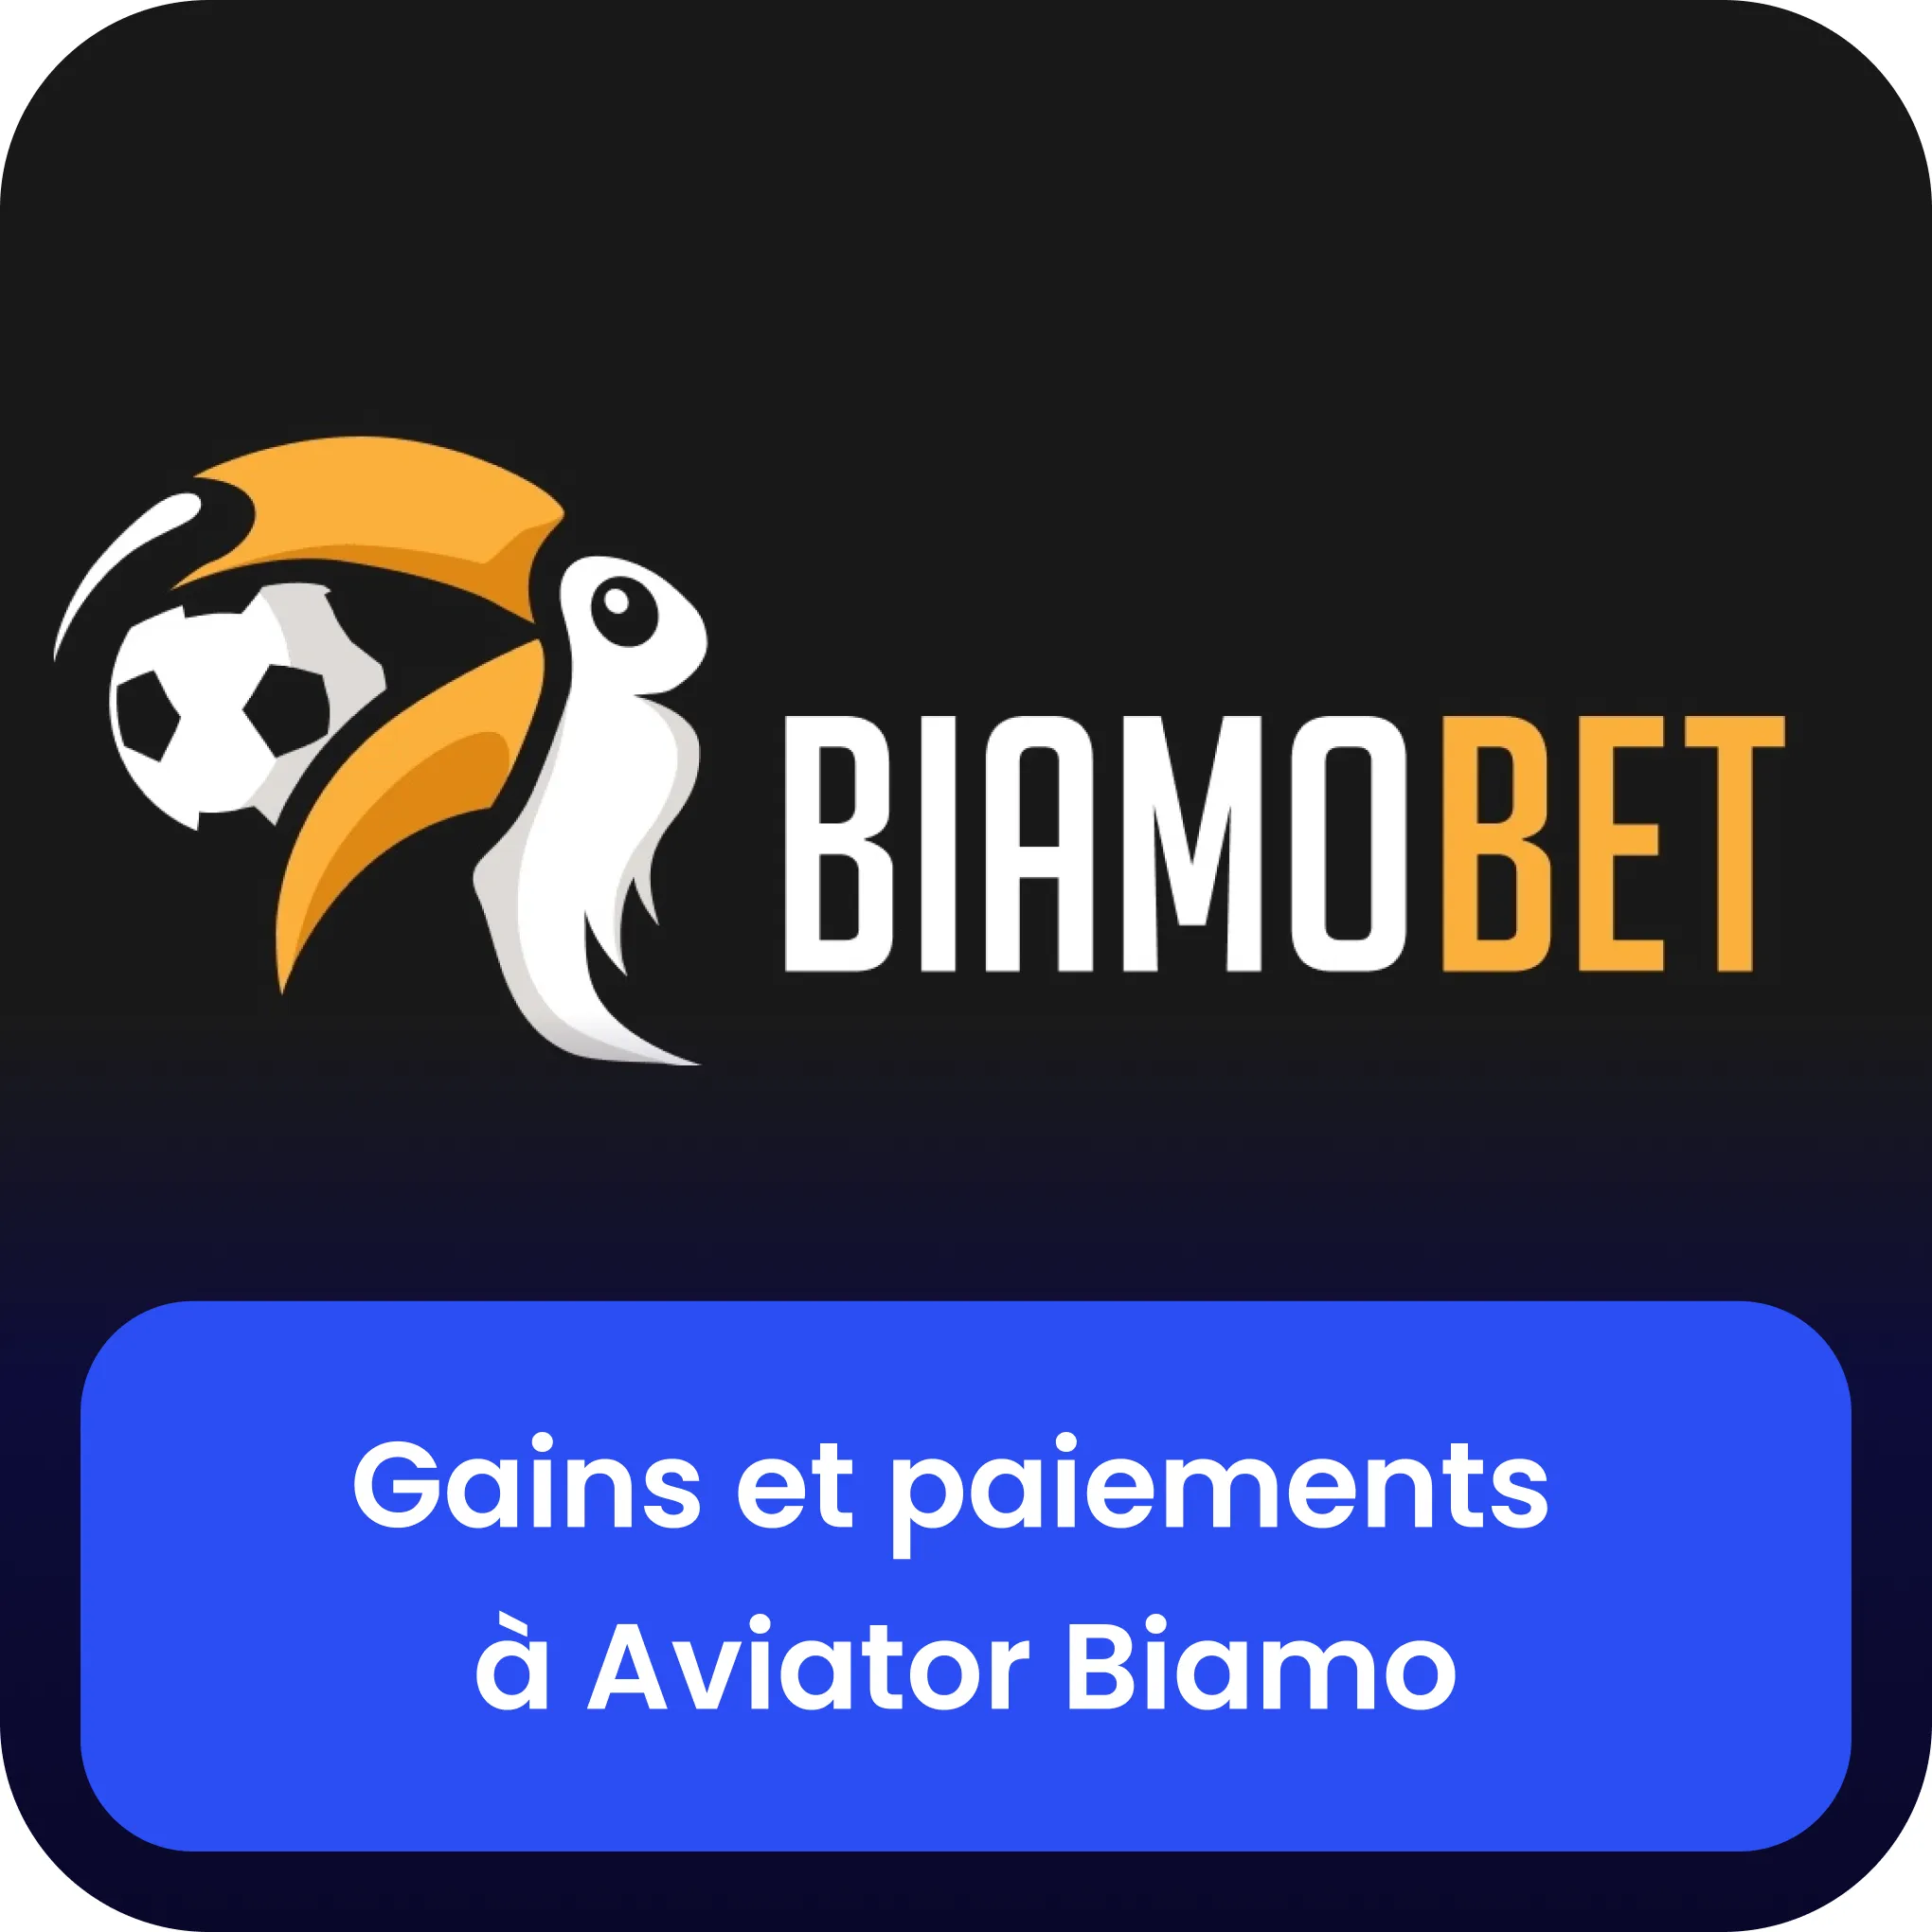 biamobet aviator gains